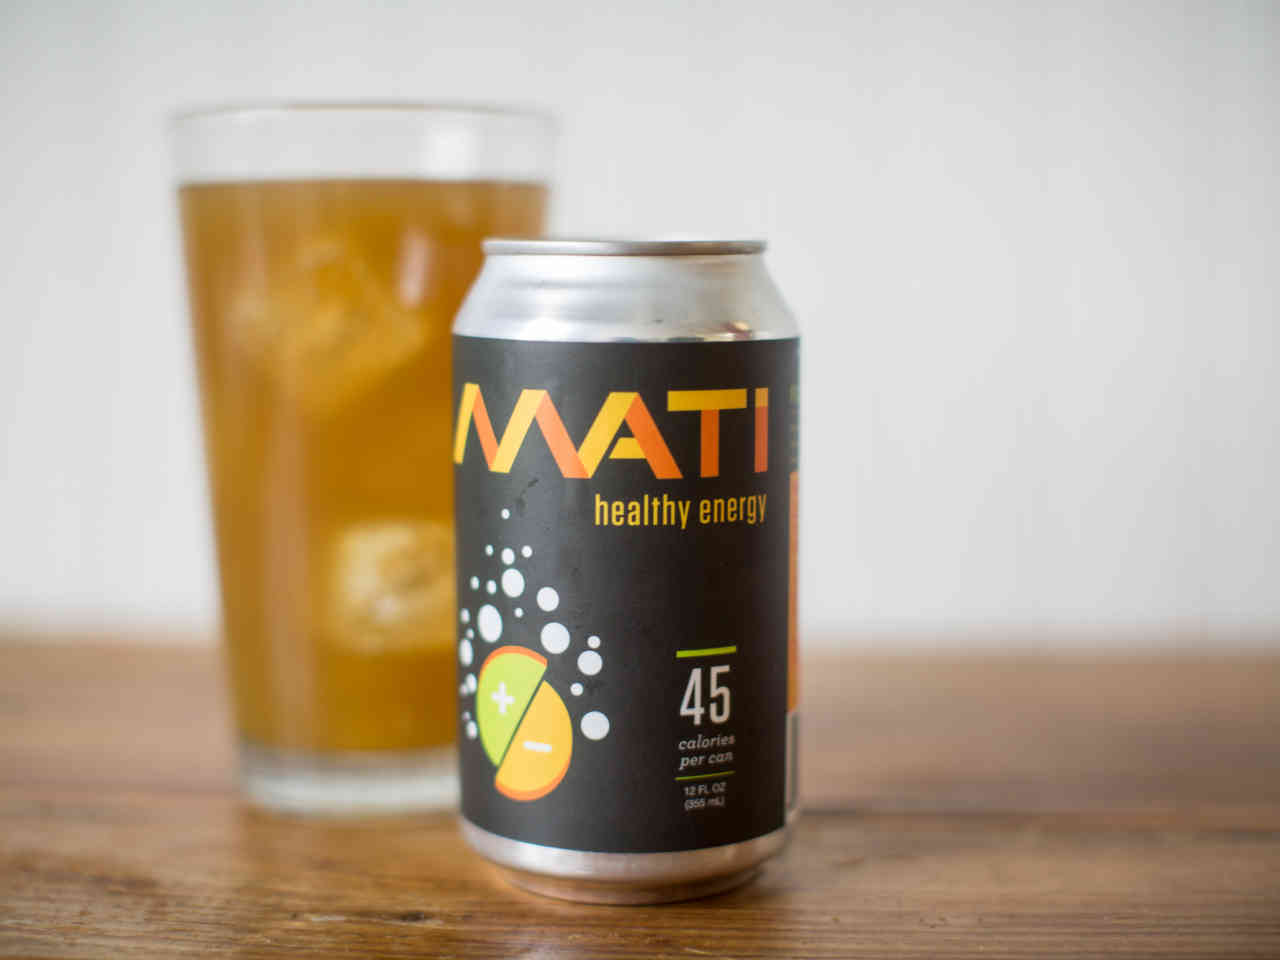 Mati energy drink